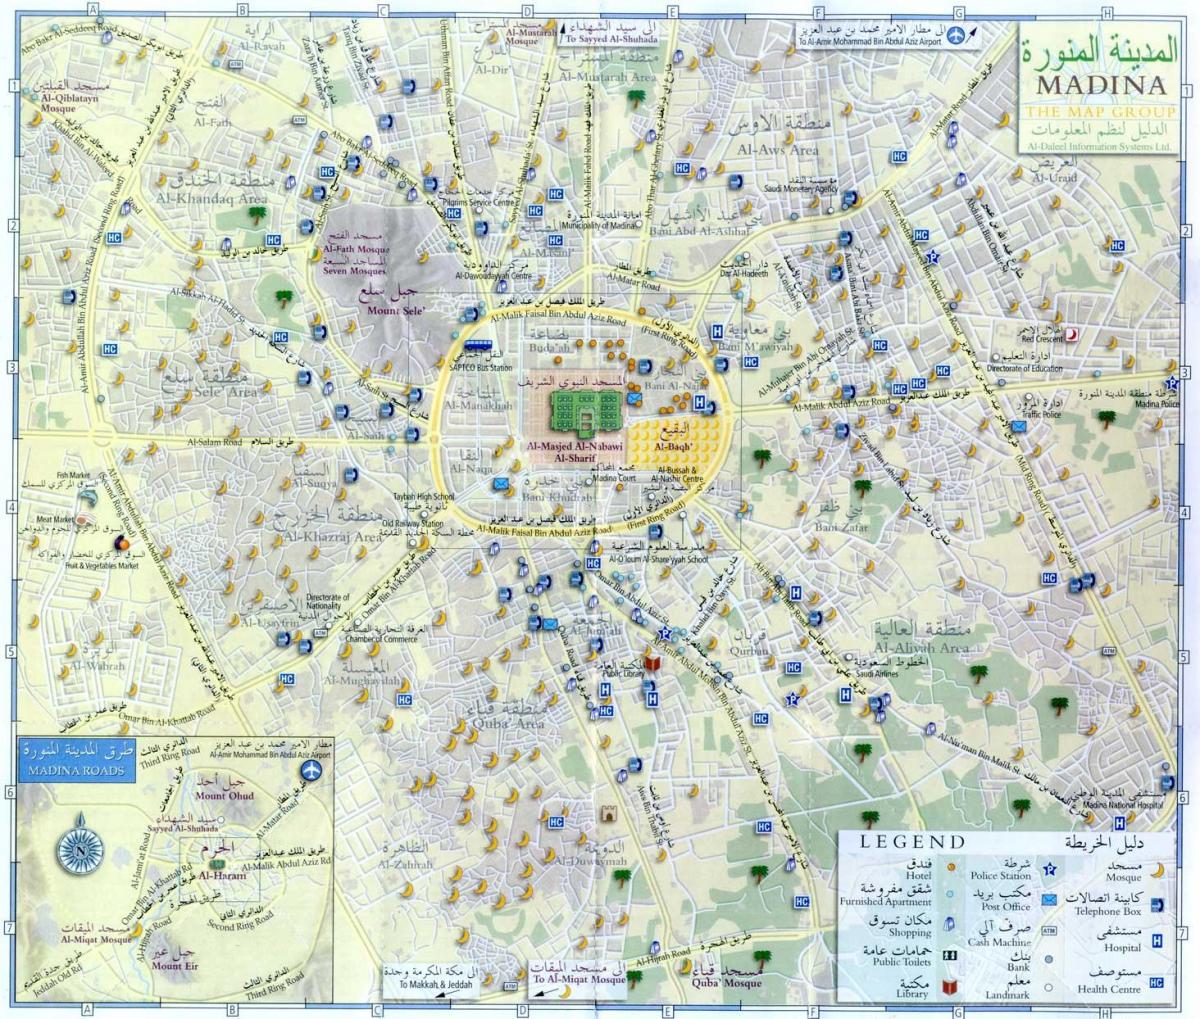 Mekka (Makkah) stadscentrum kaart